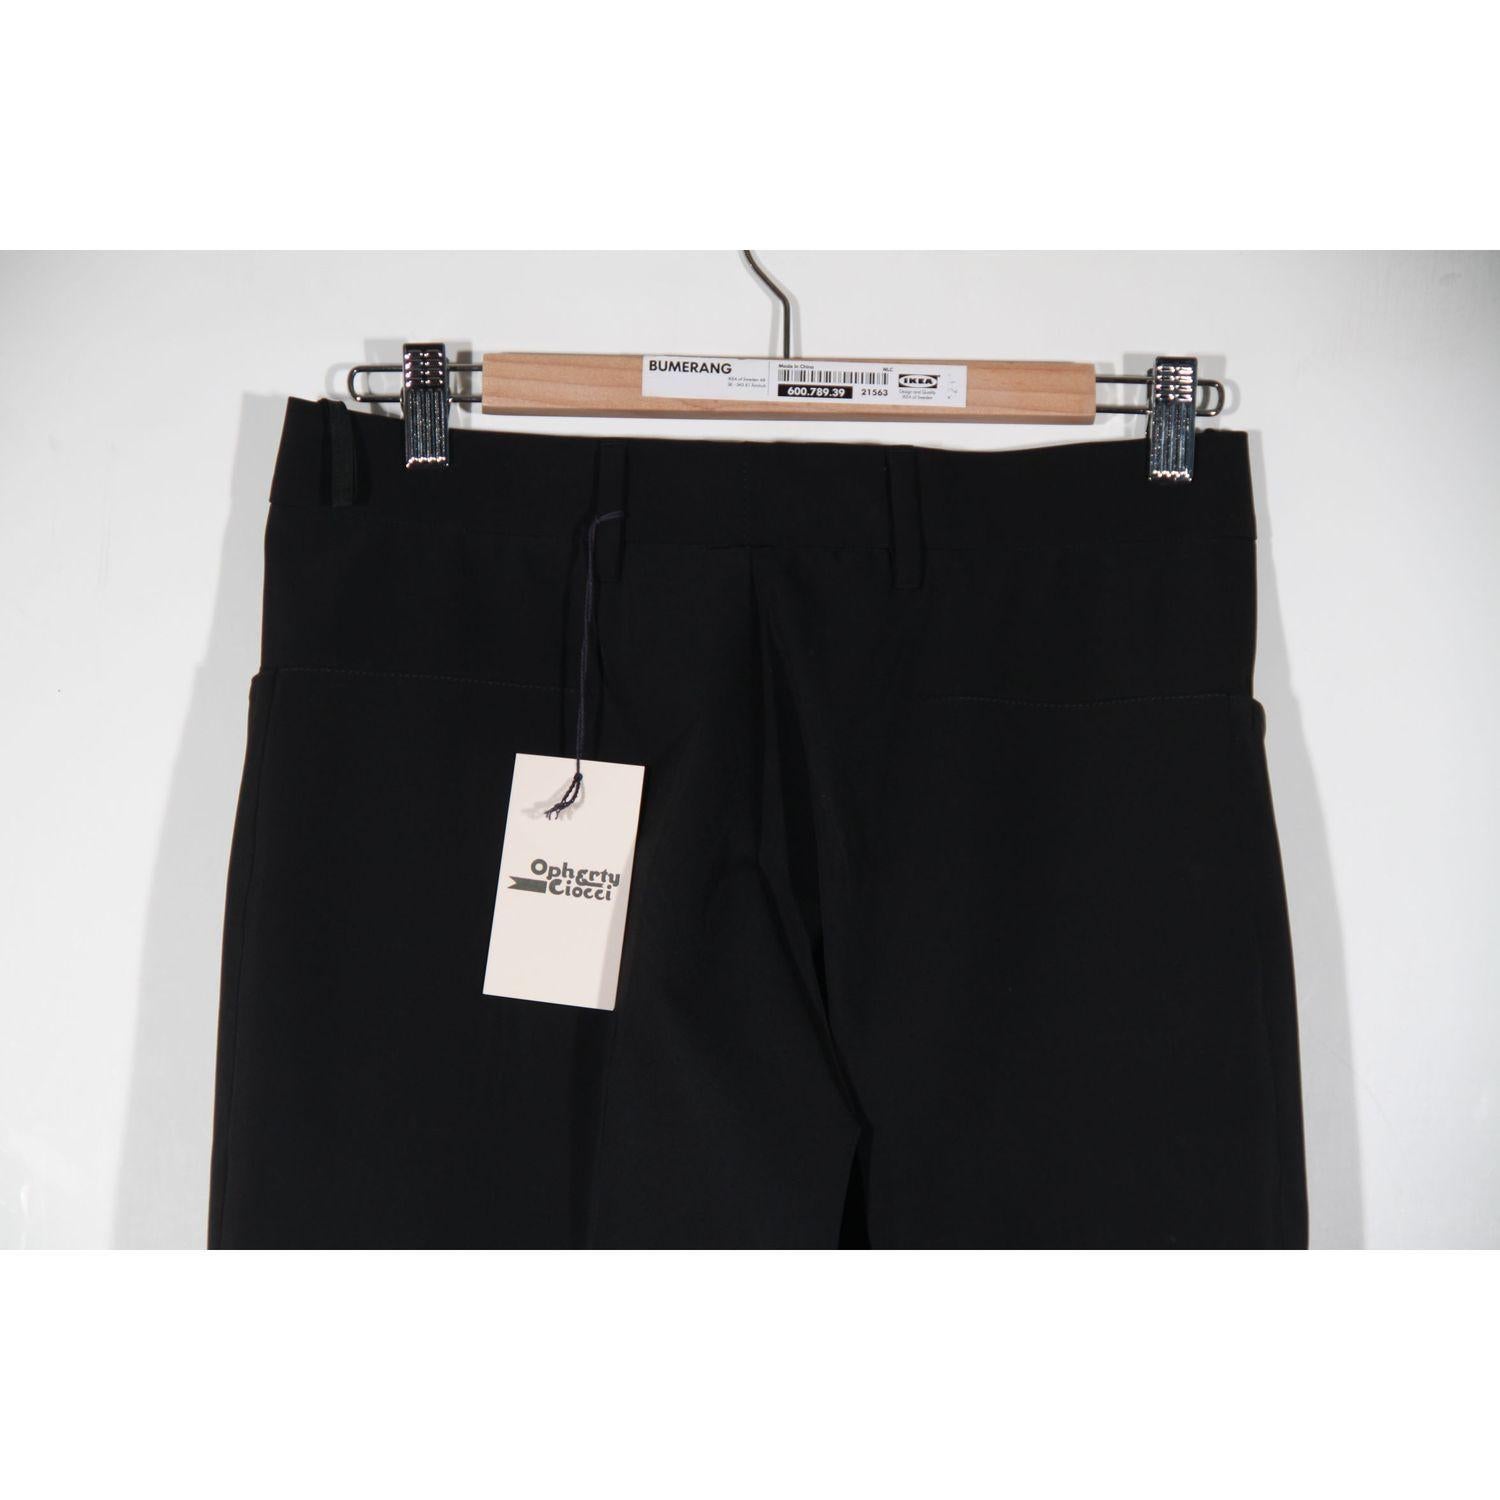 Prada Black Poly Techno Fabric Tailored Trousers Pants Size 42 1